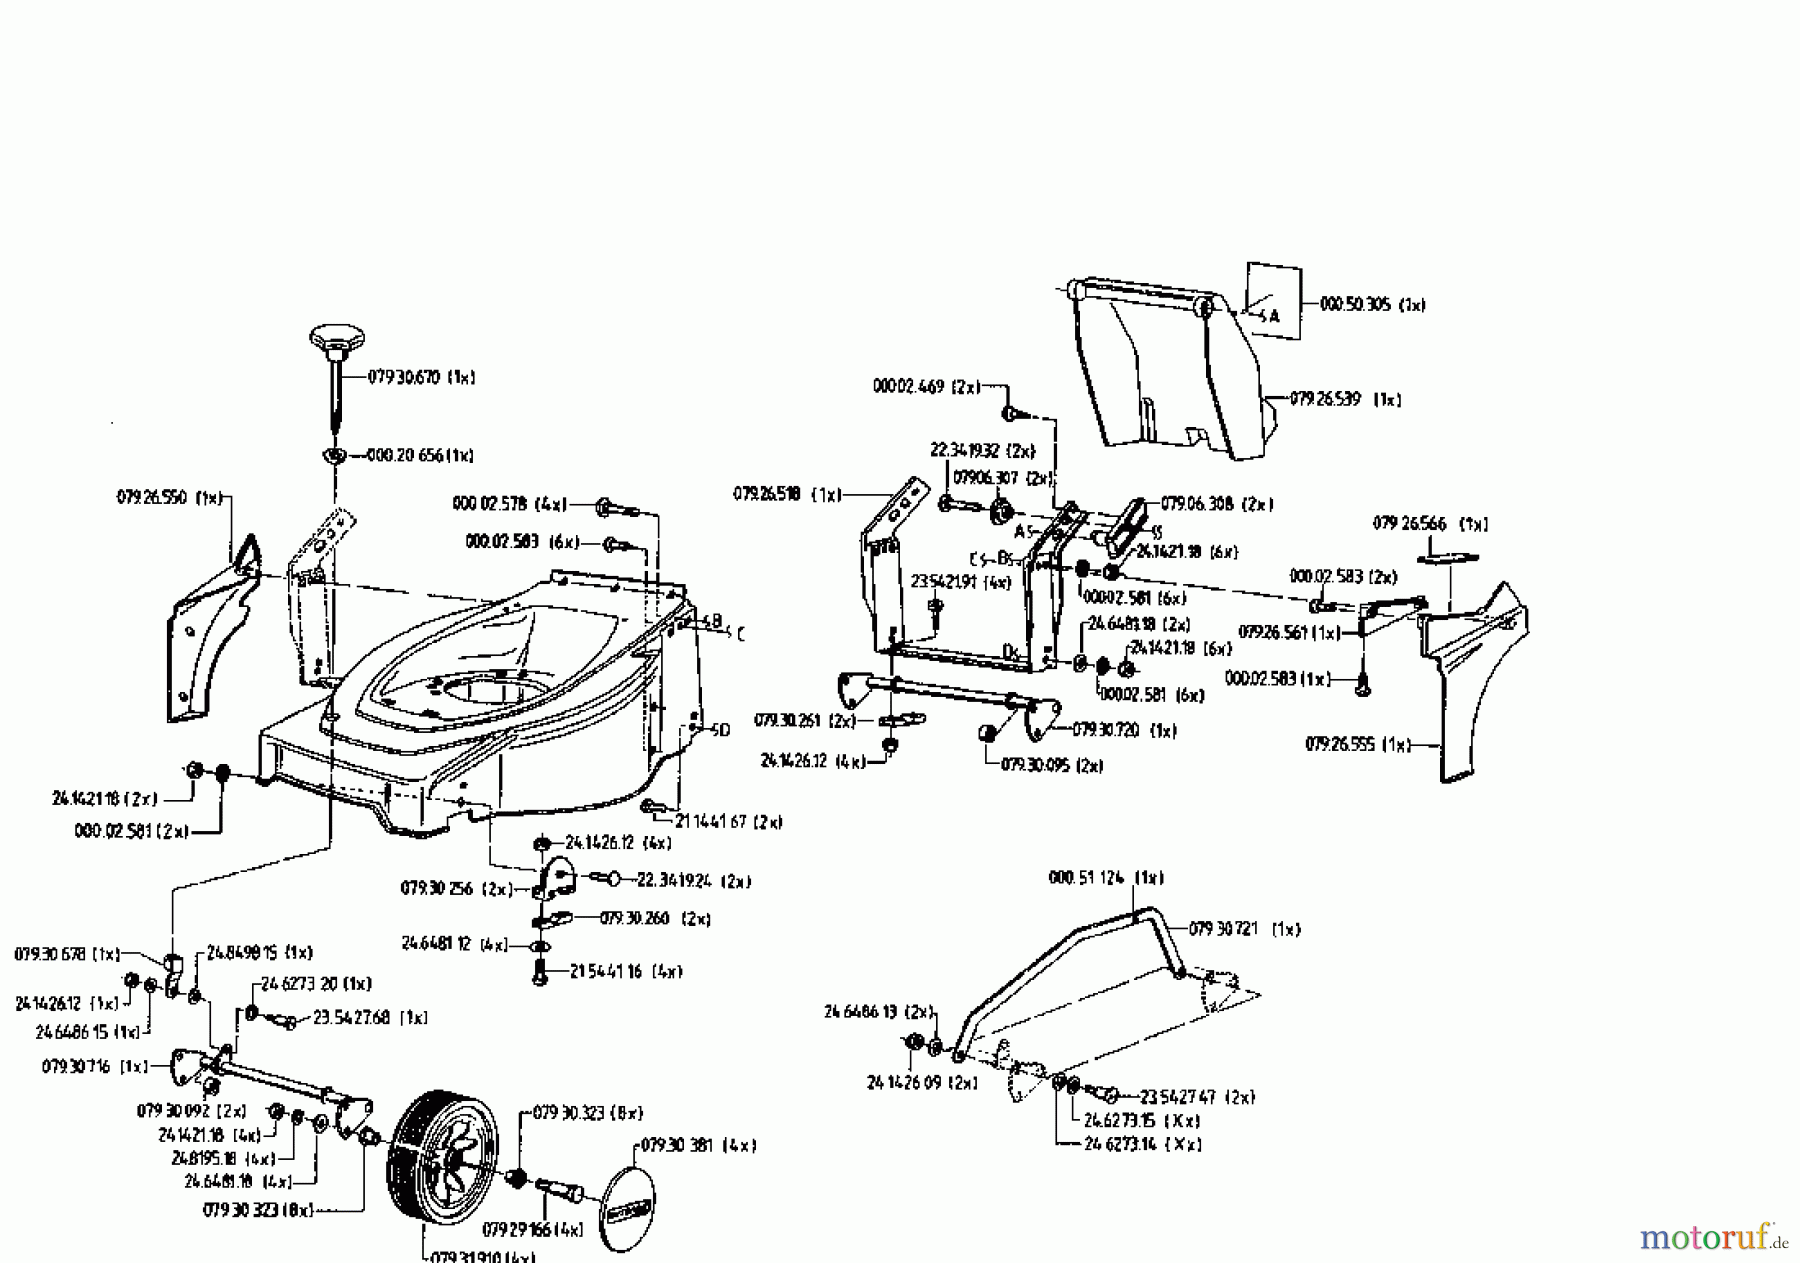  Gutbrod Electric mower HE 42 L 04030.02  (1995) Basic machine